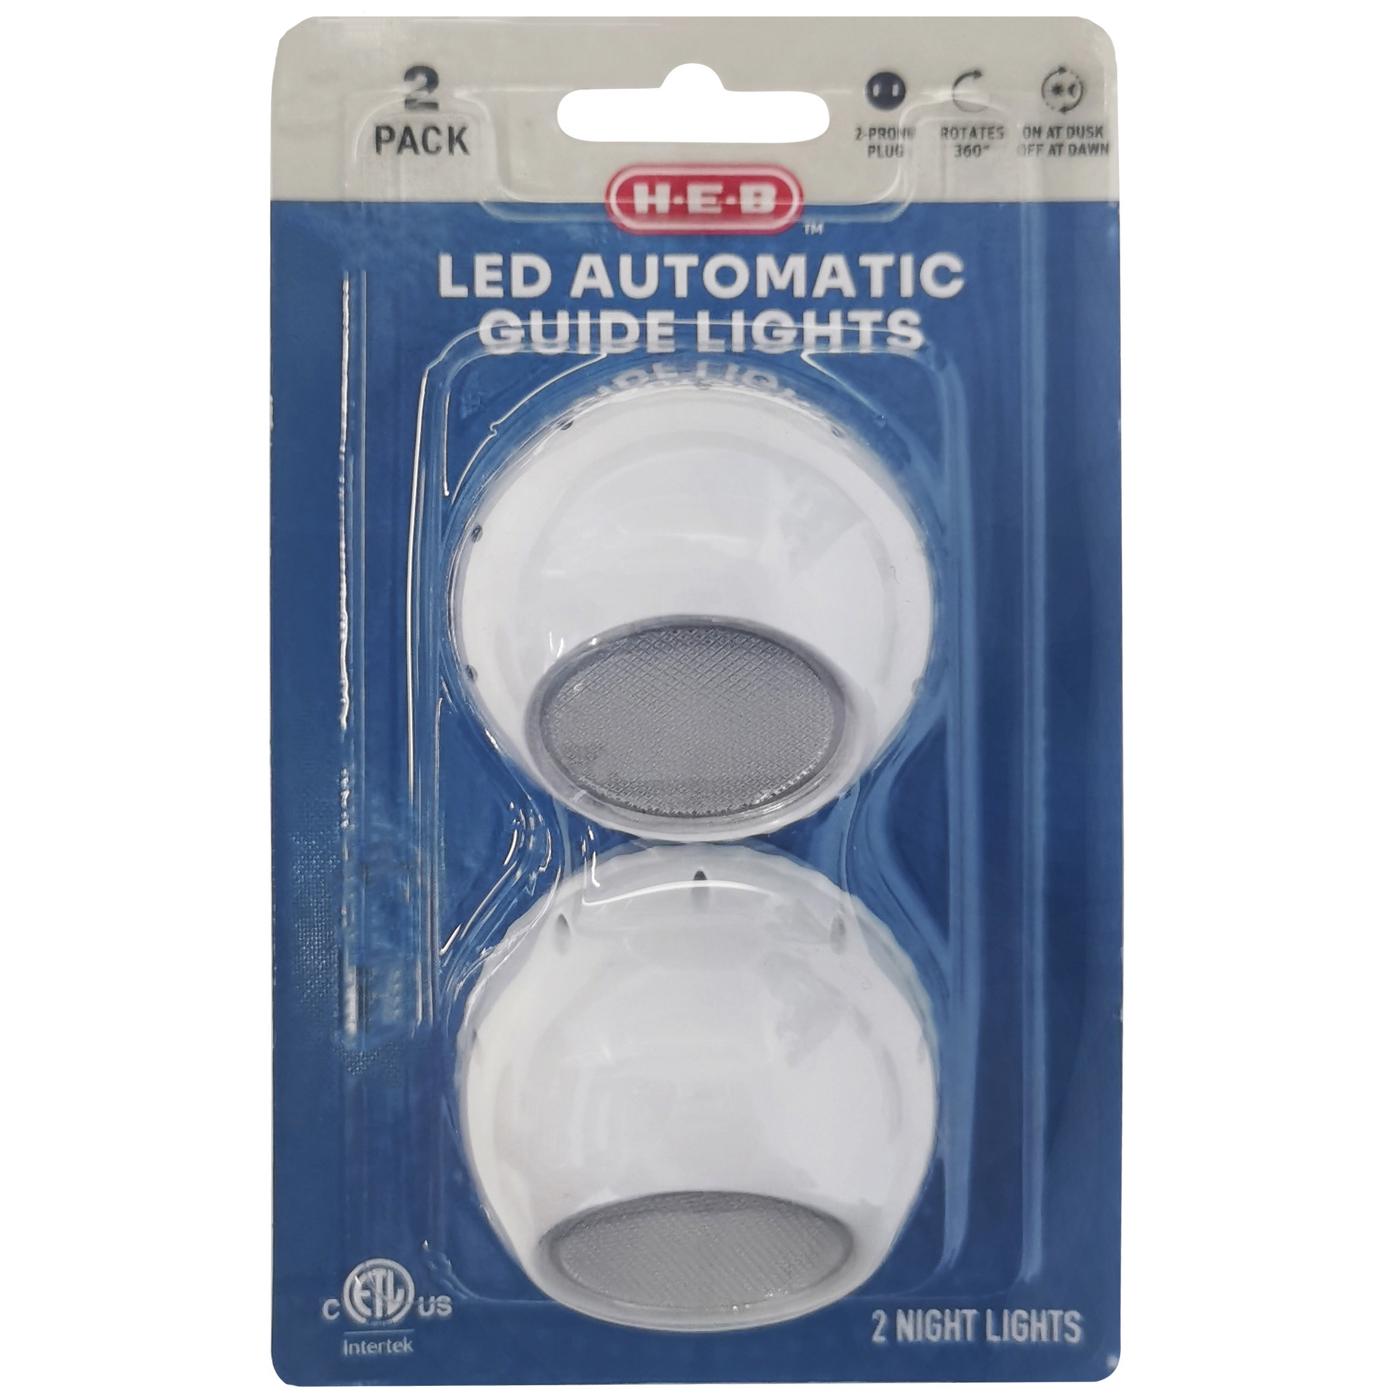 H-E-B LED Automatic Guide Lights; image 1 of 3